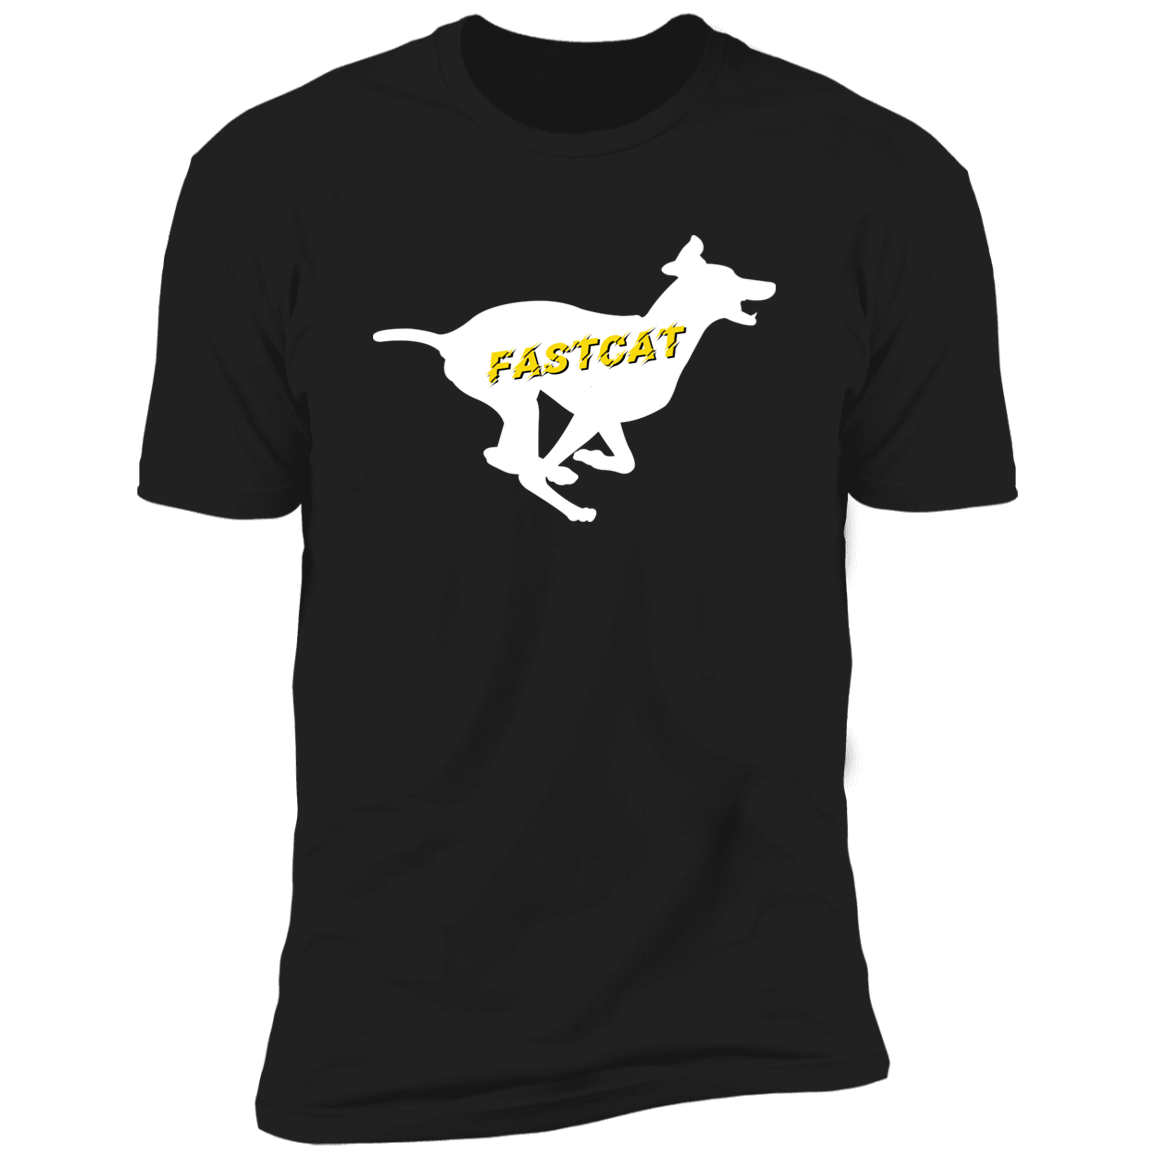 FastCAT Dog T-shirt, sporting dog t-shirt for humans, FastCAT t-shirt, in black